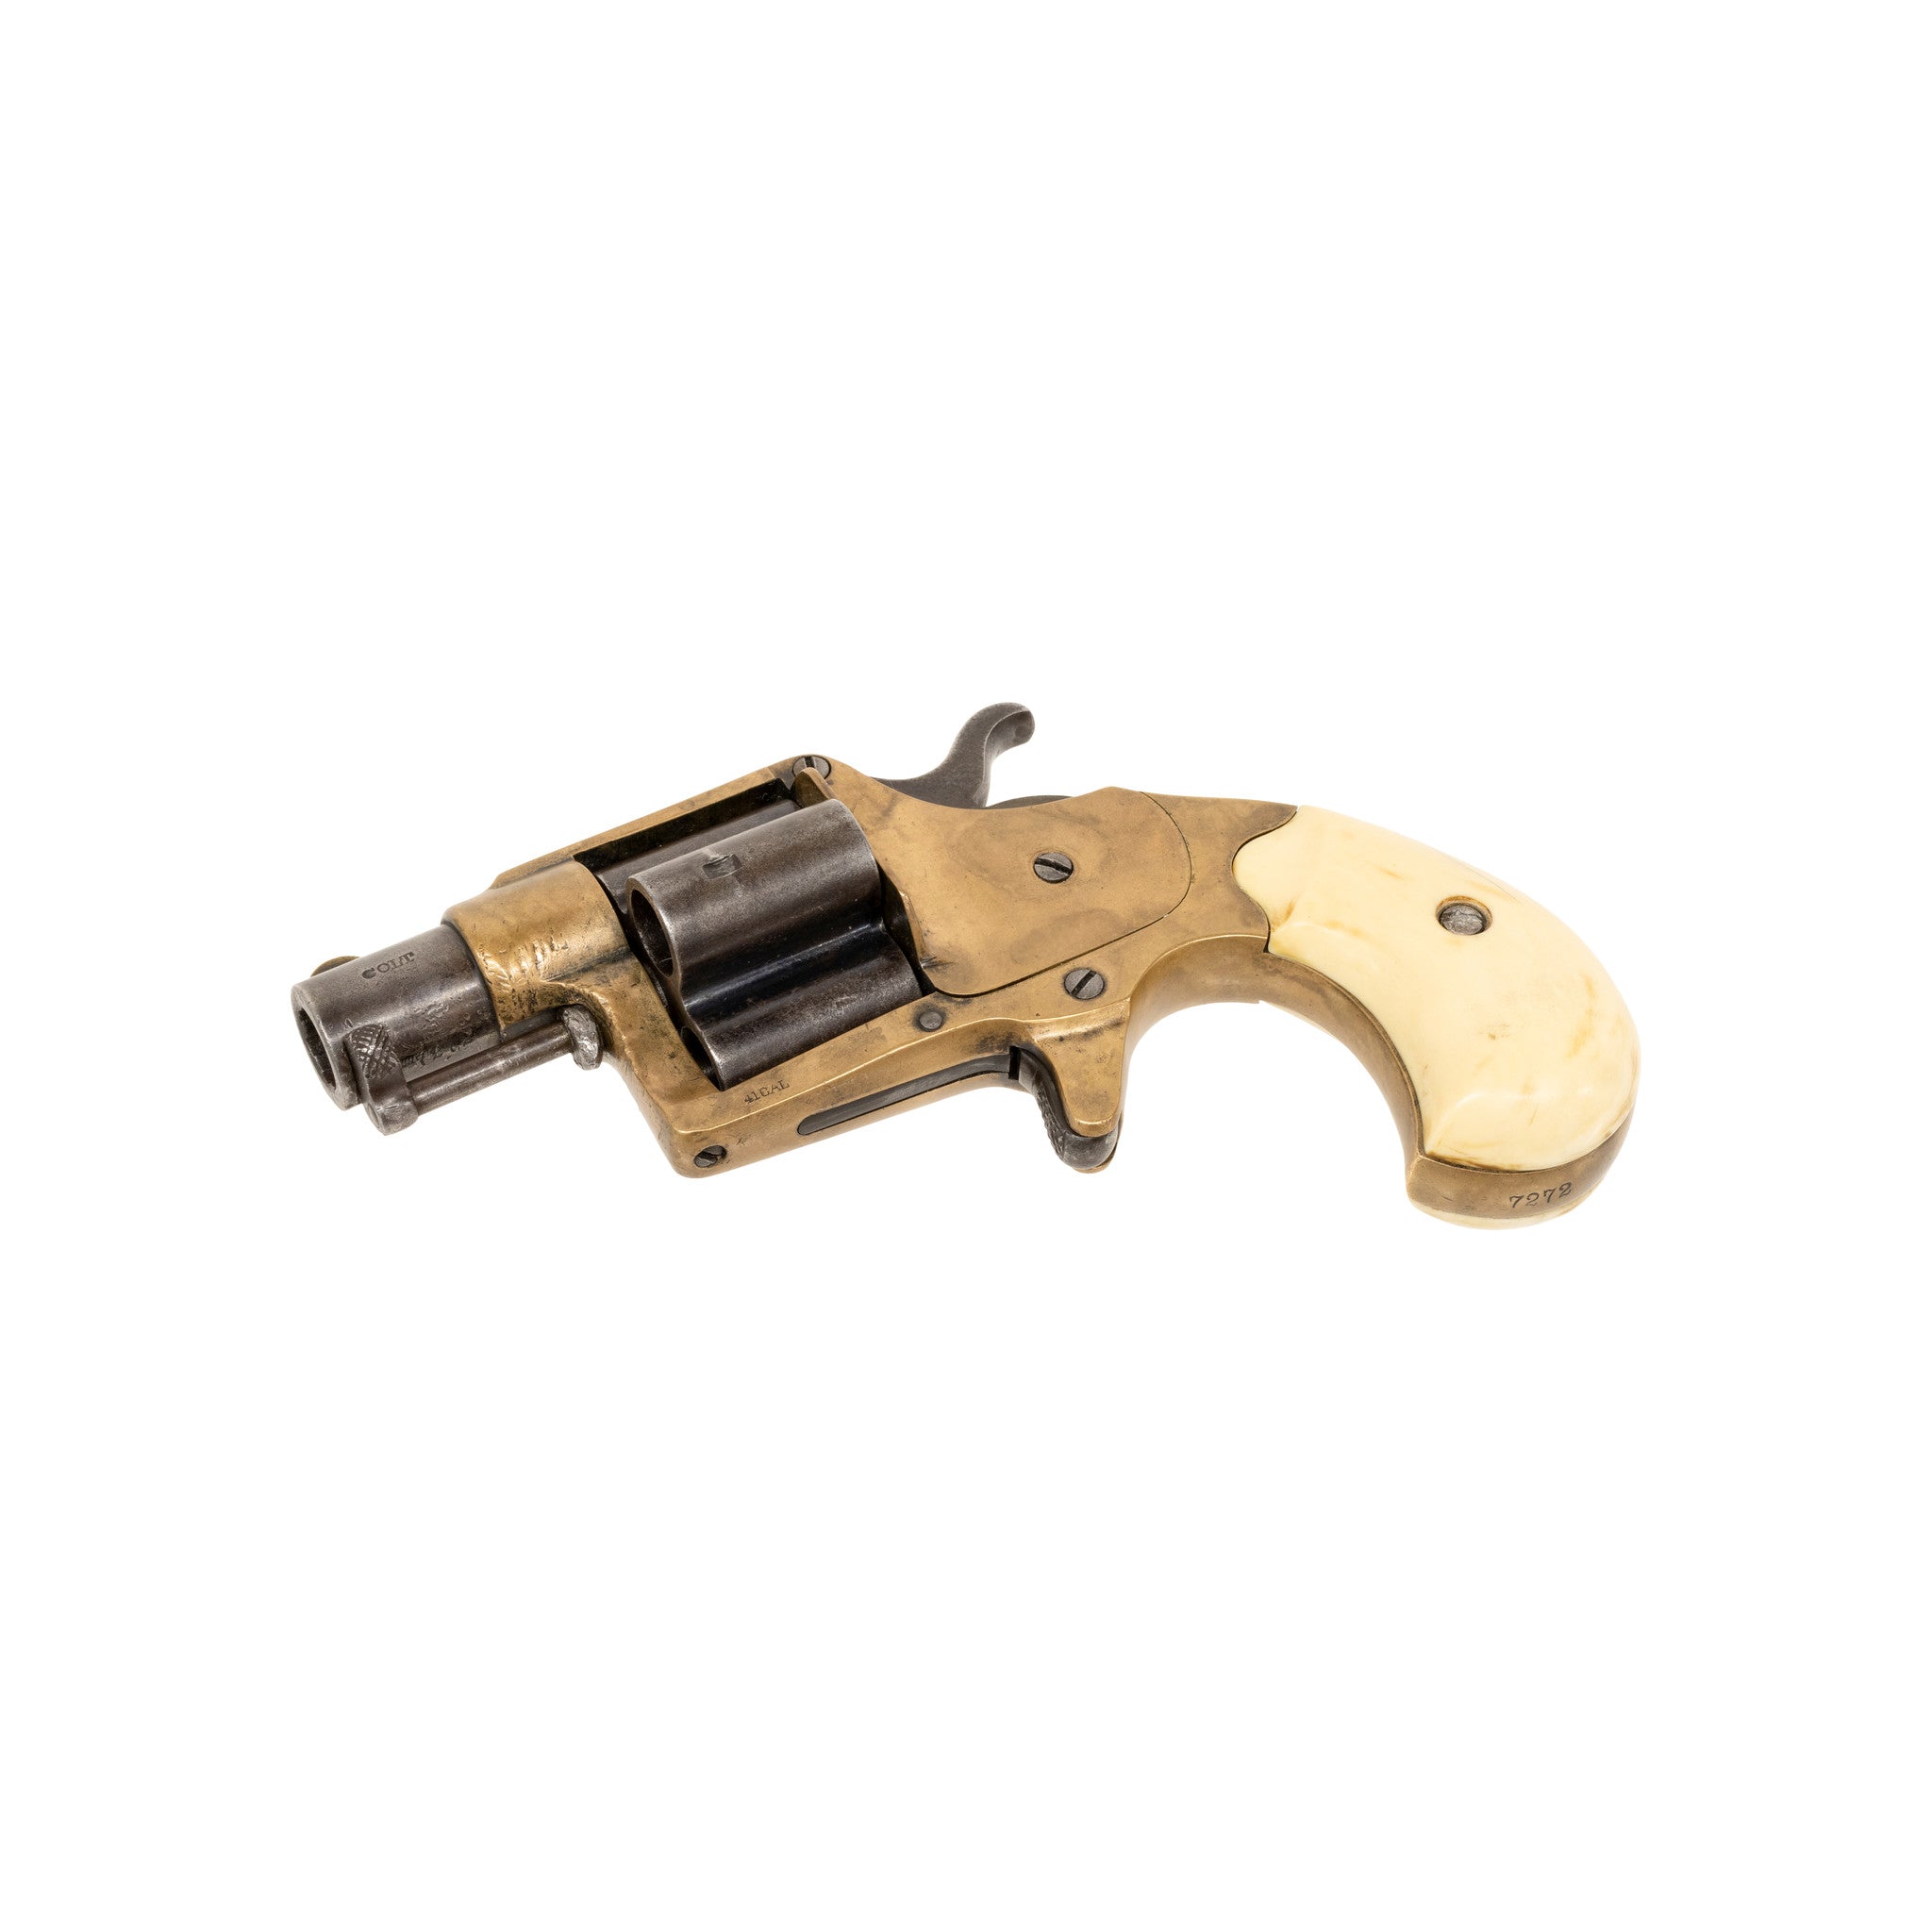 Short Barrel Colt Cloverleaf Revolver